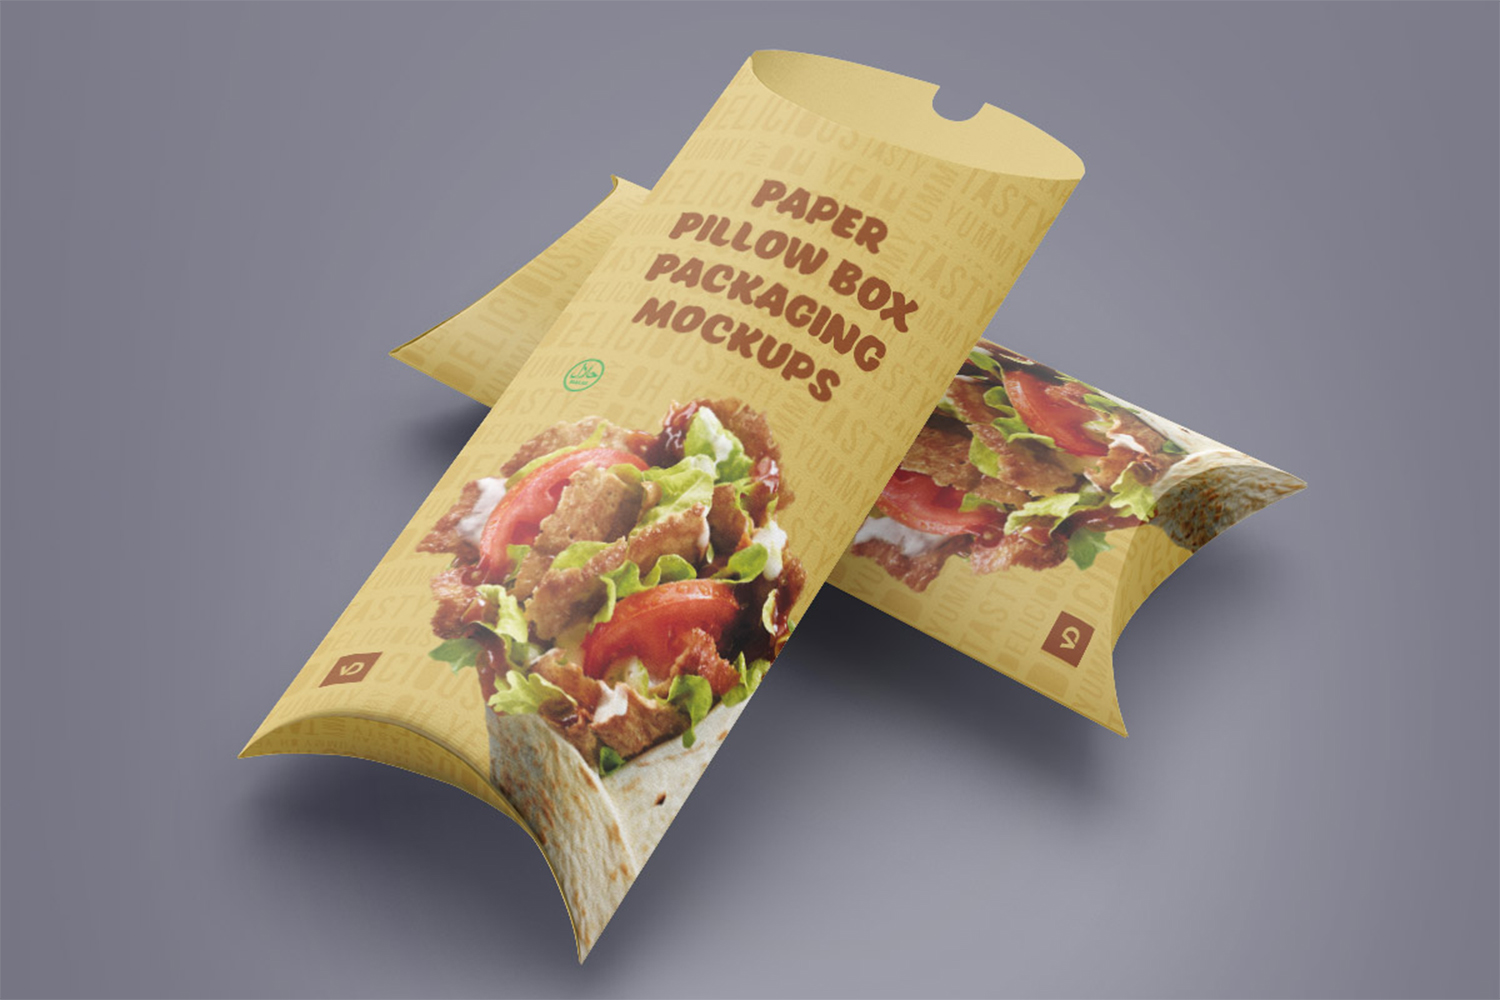 Paper Pillow Box Packaging Mockup Free Download